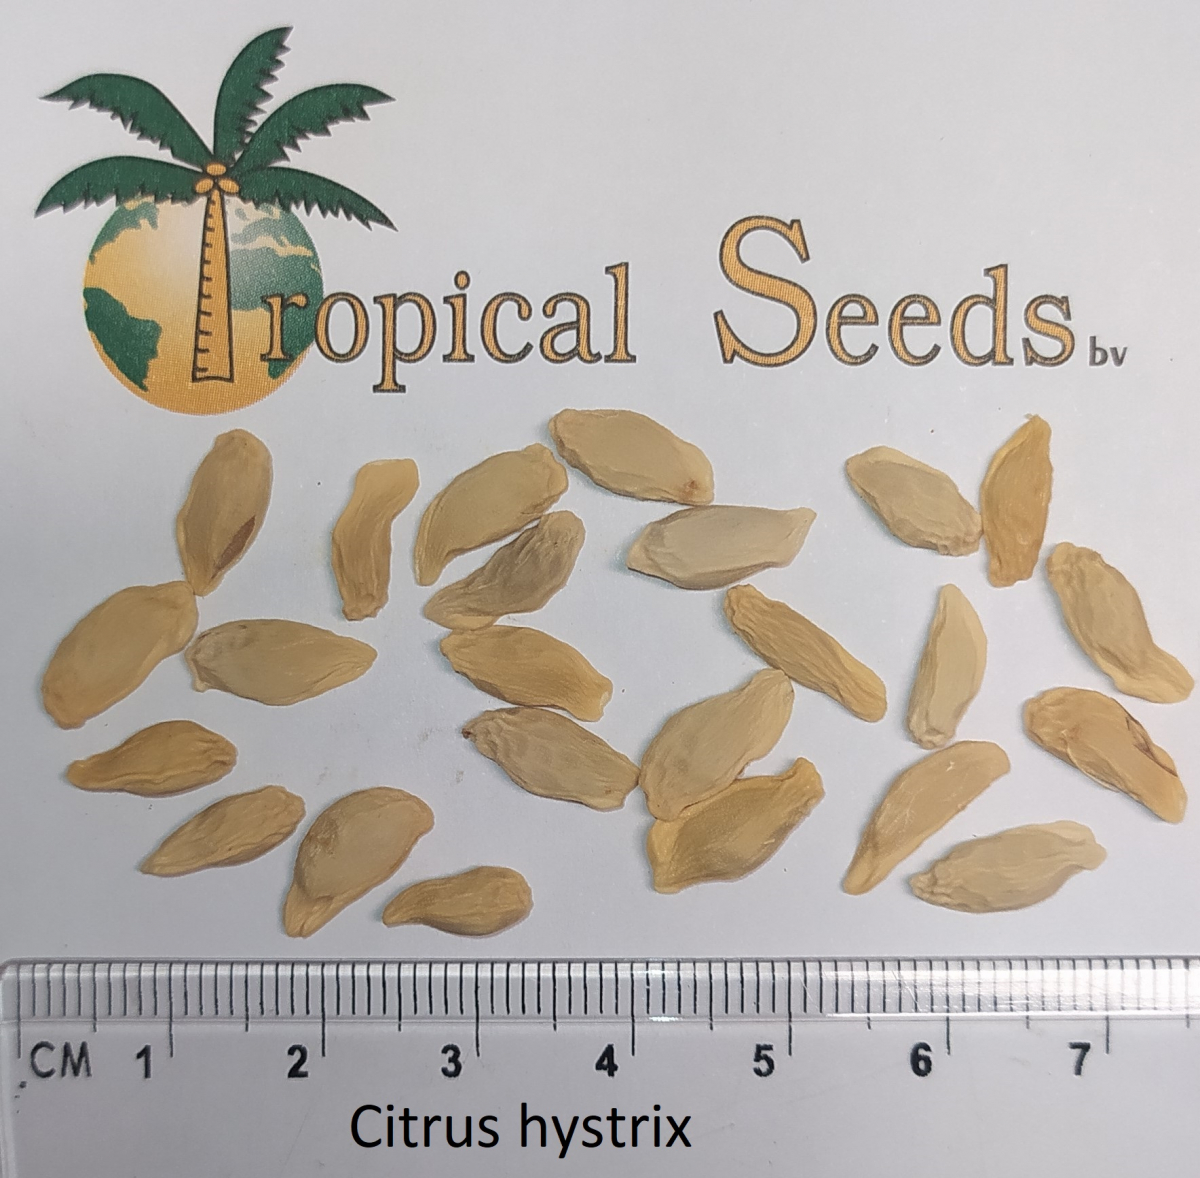 Citrus hystrix Seeds